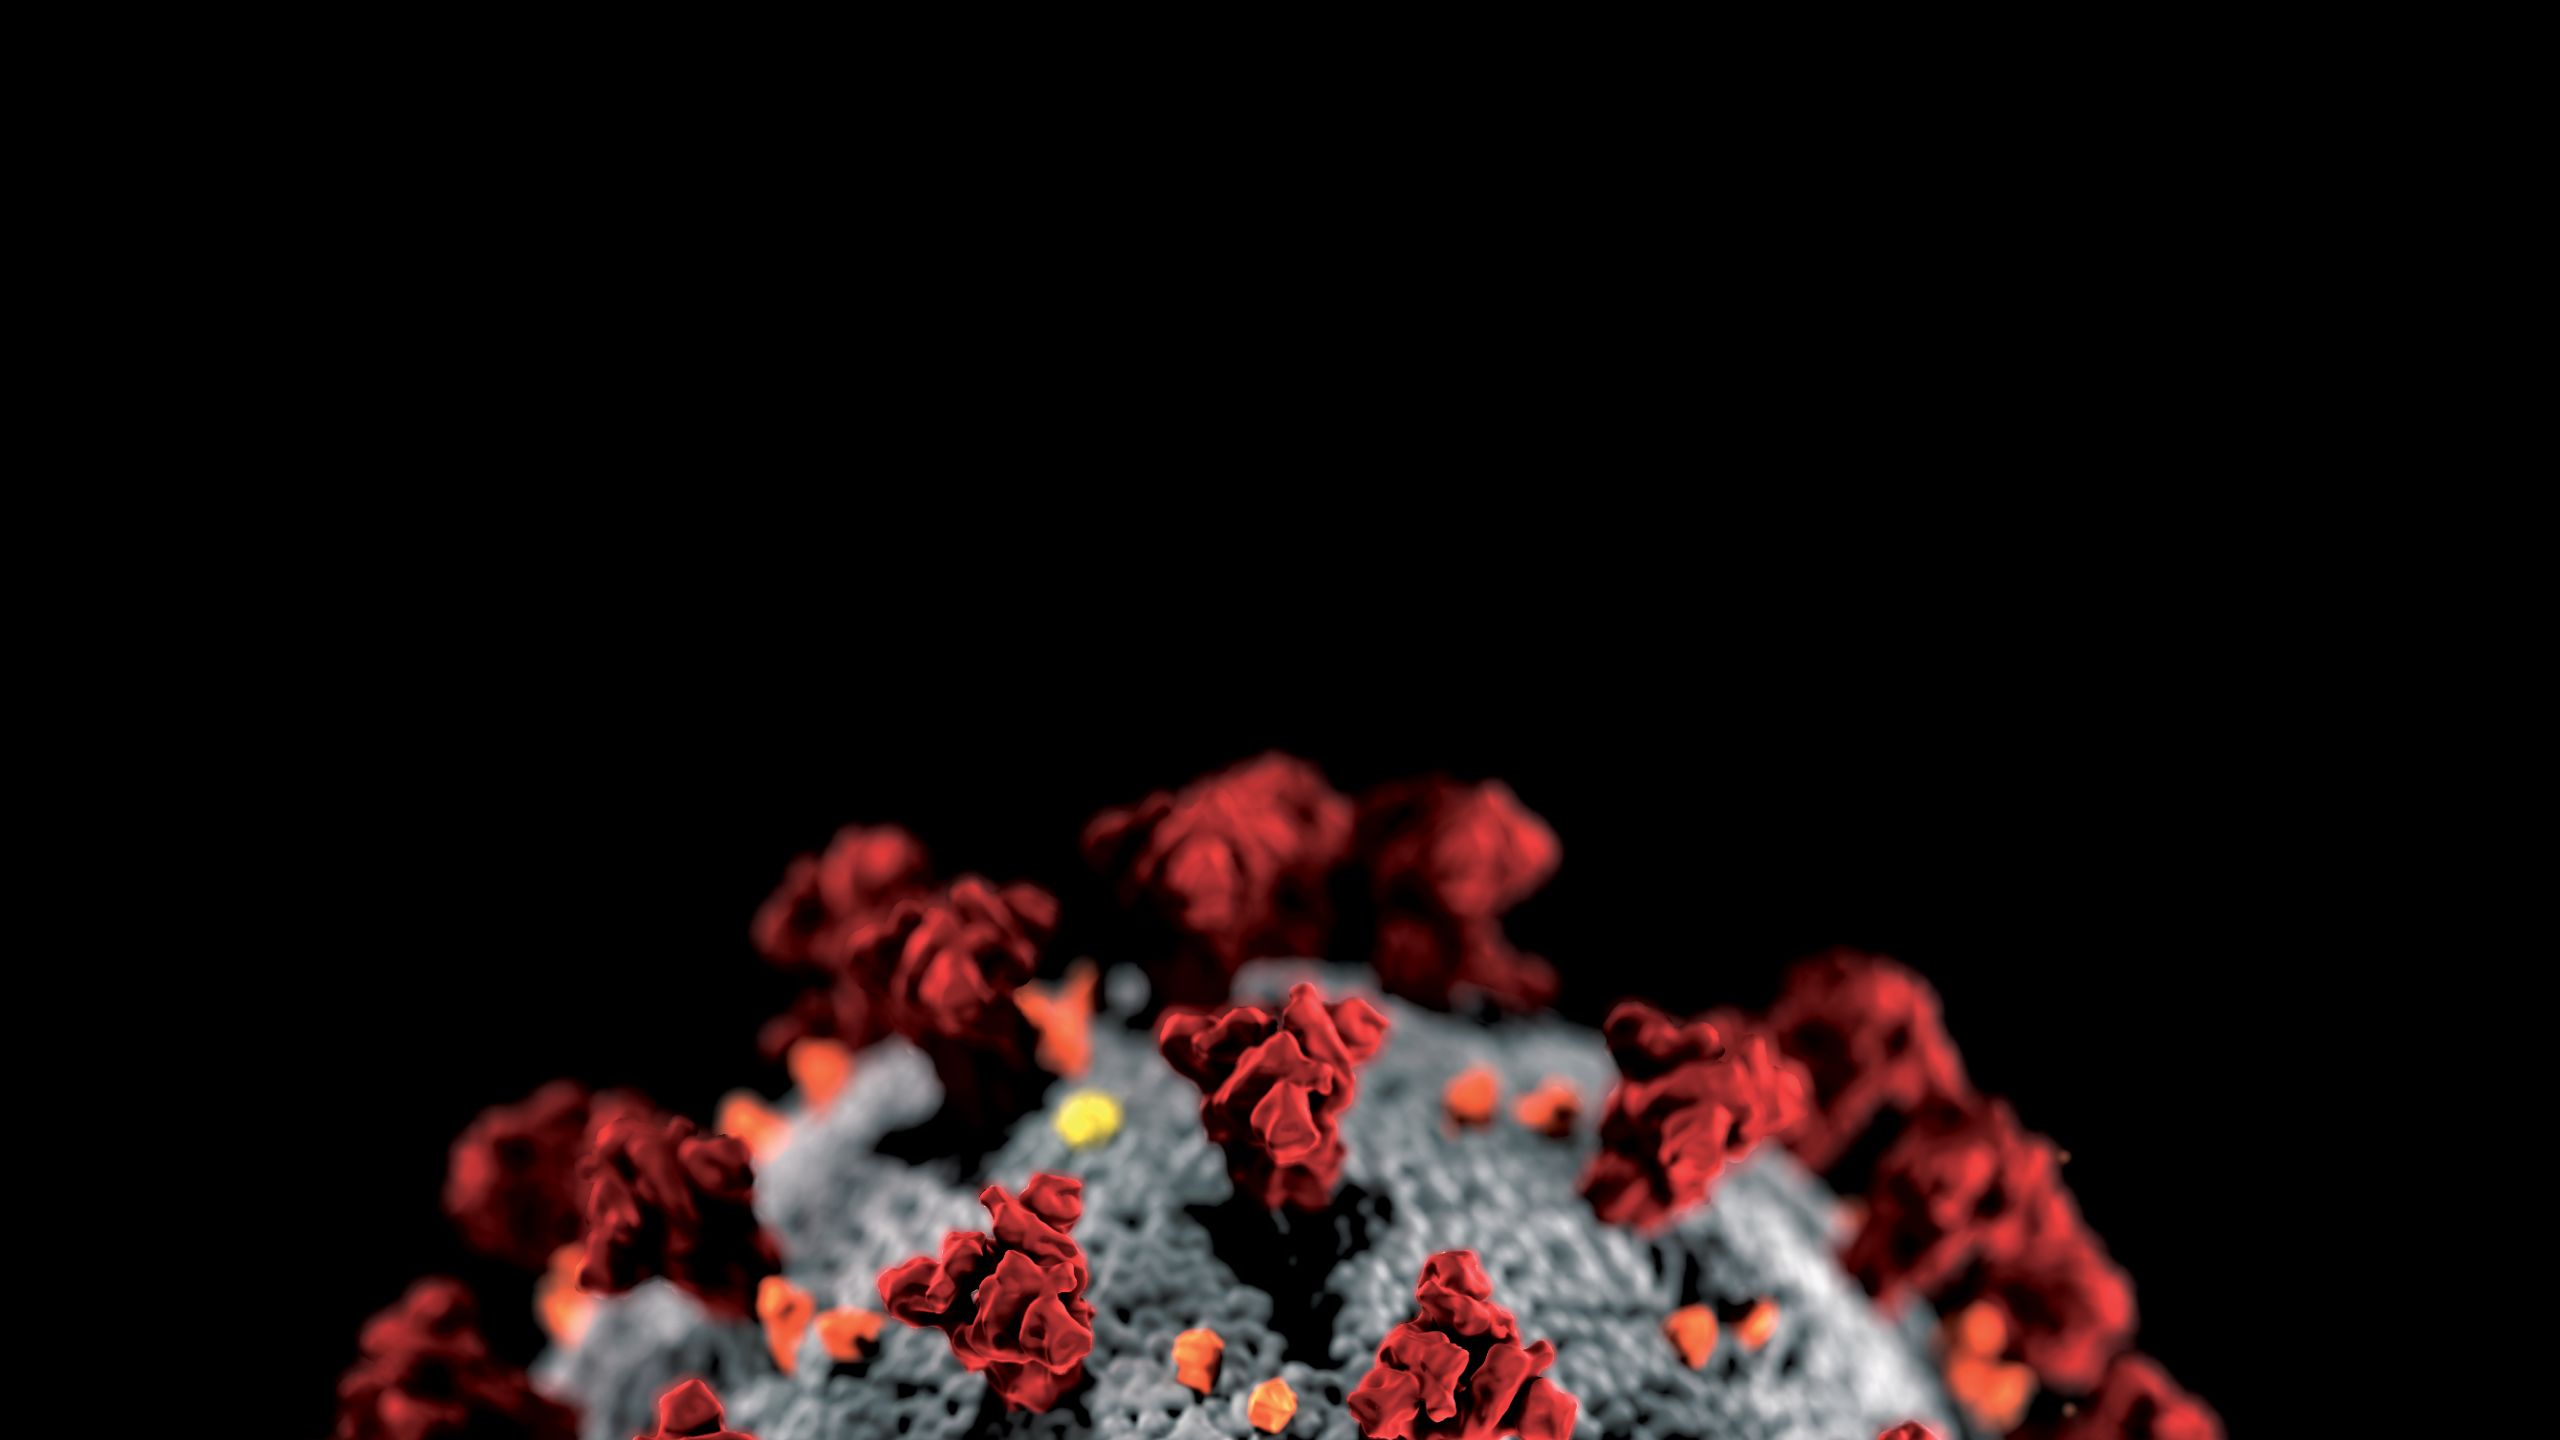 image of a corona virus